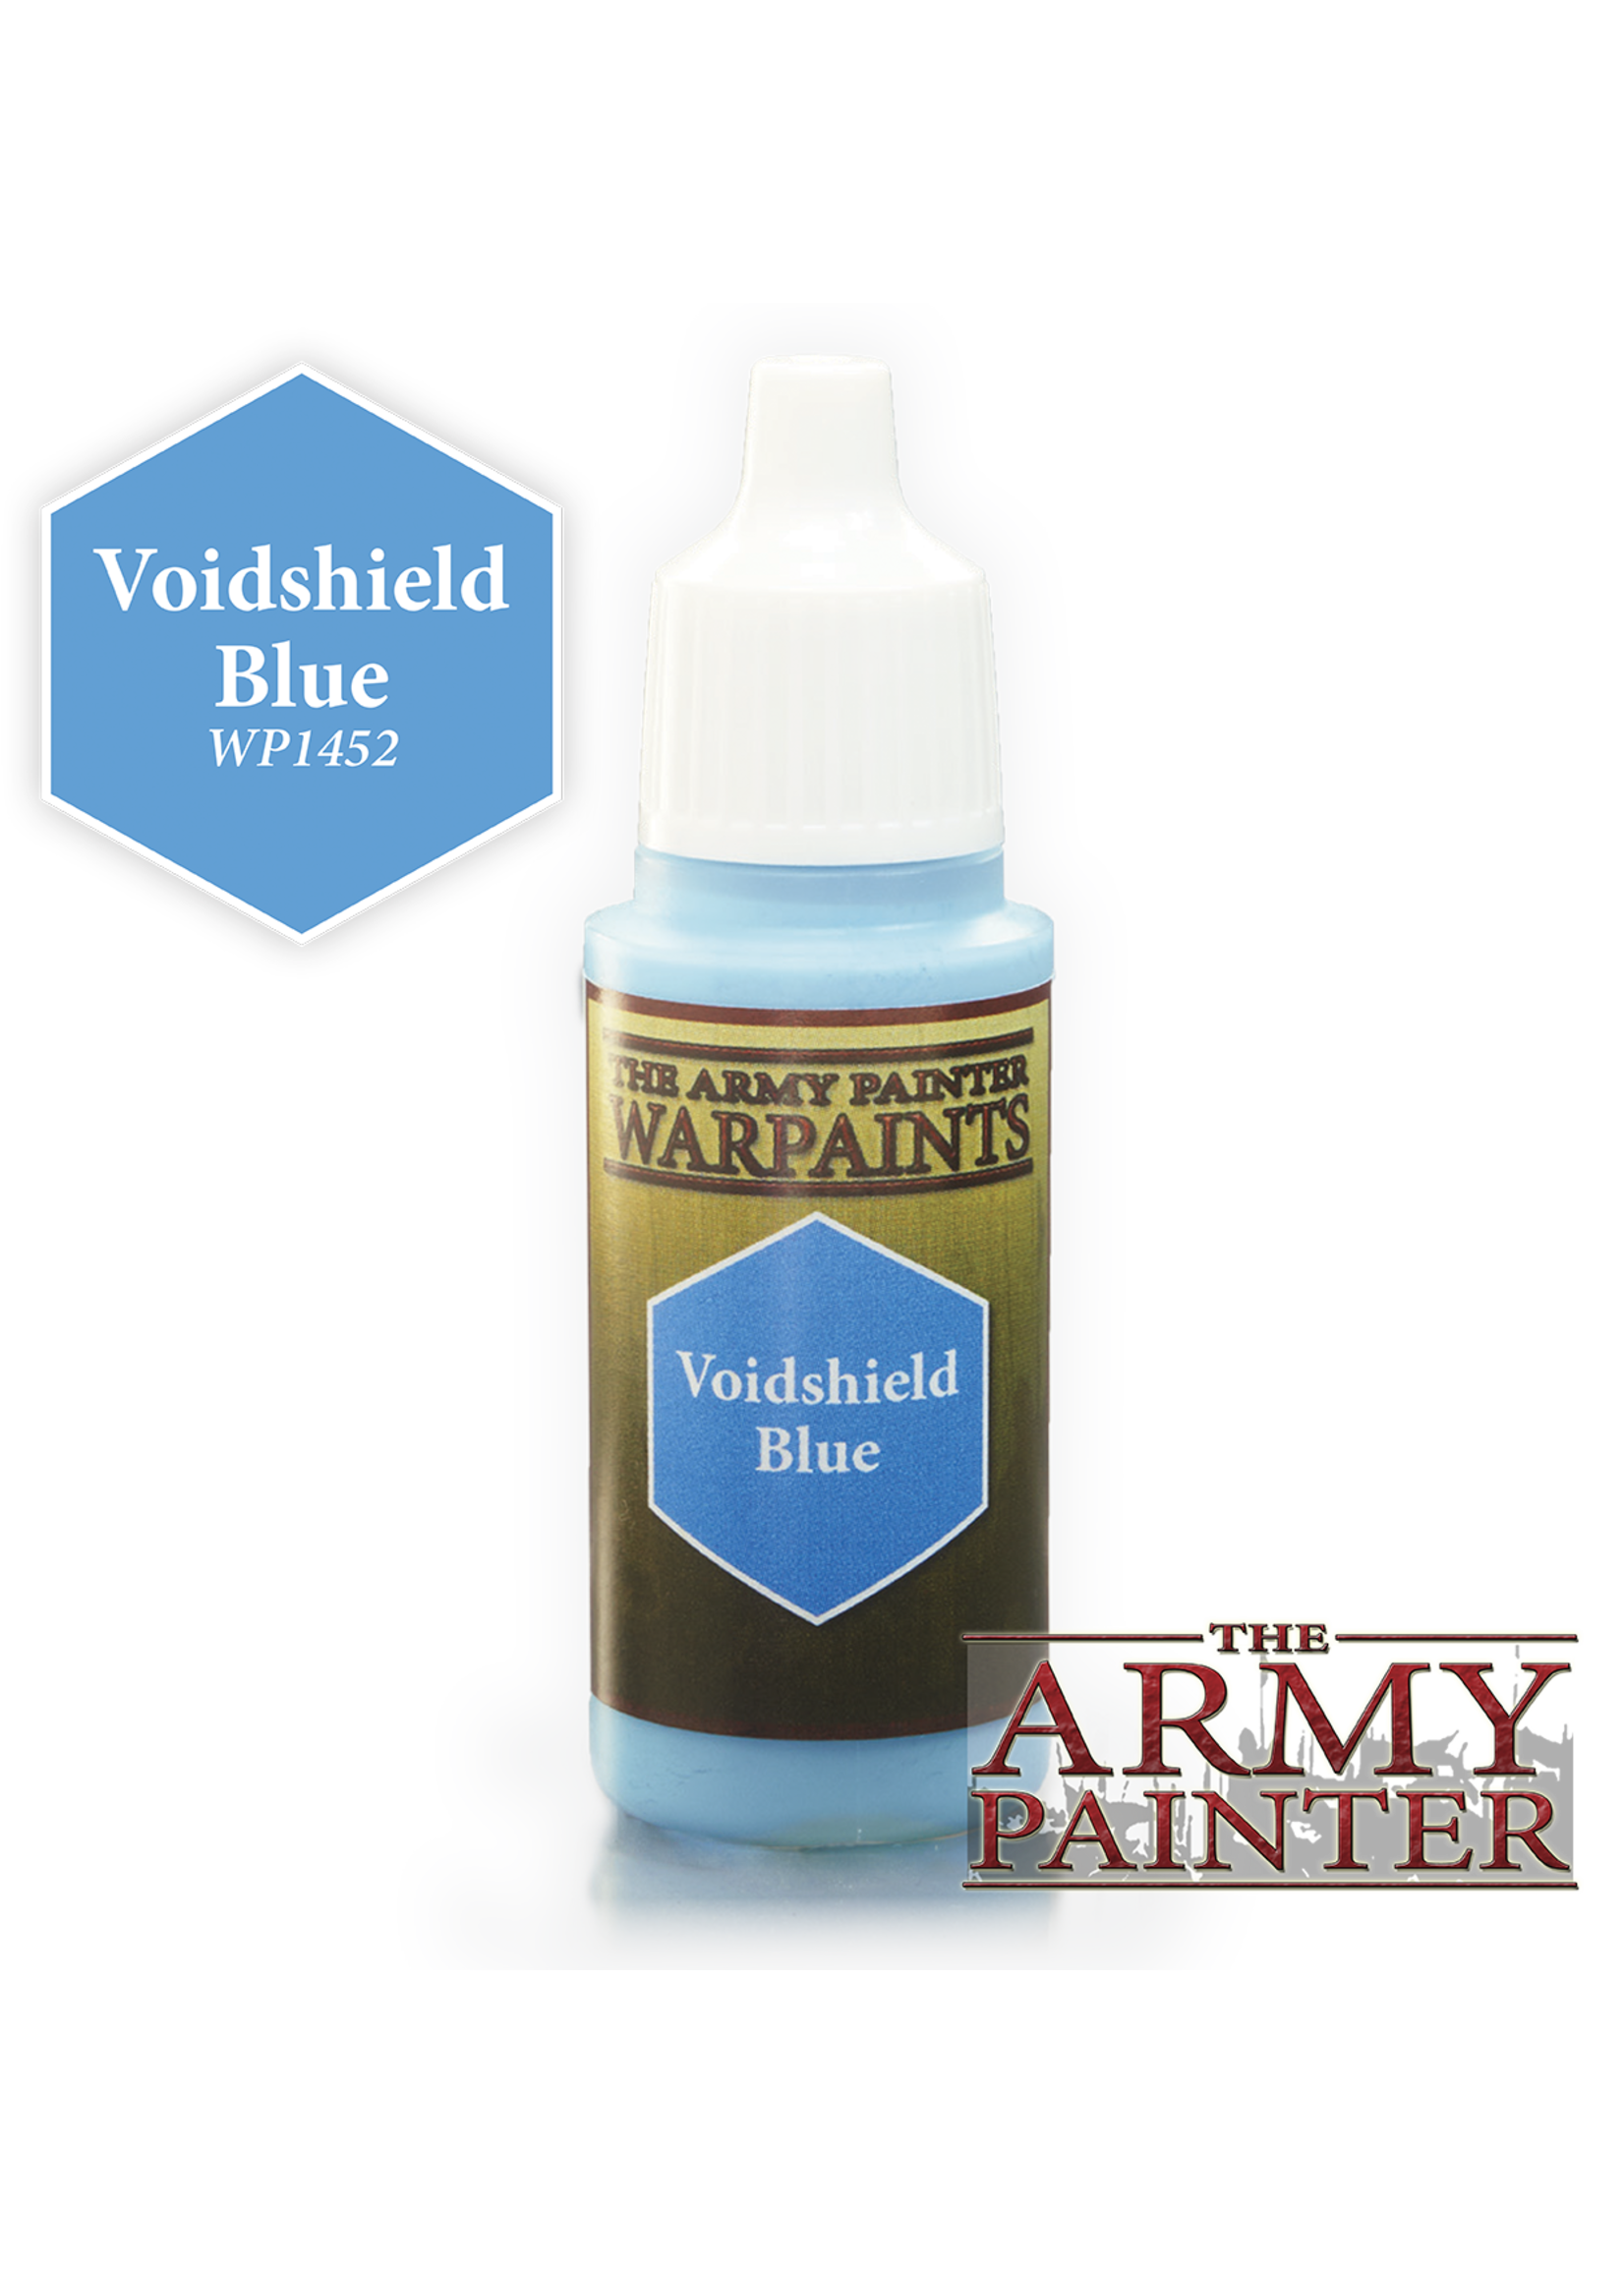 The Army Painter Acrylics Warpaints Voidshield Blue